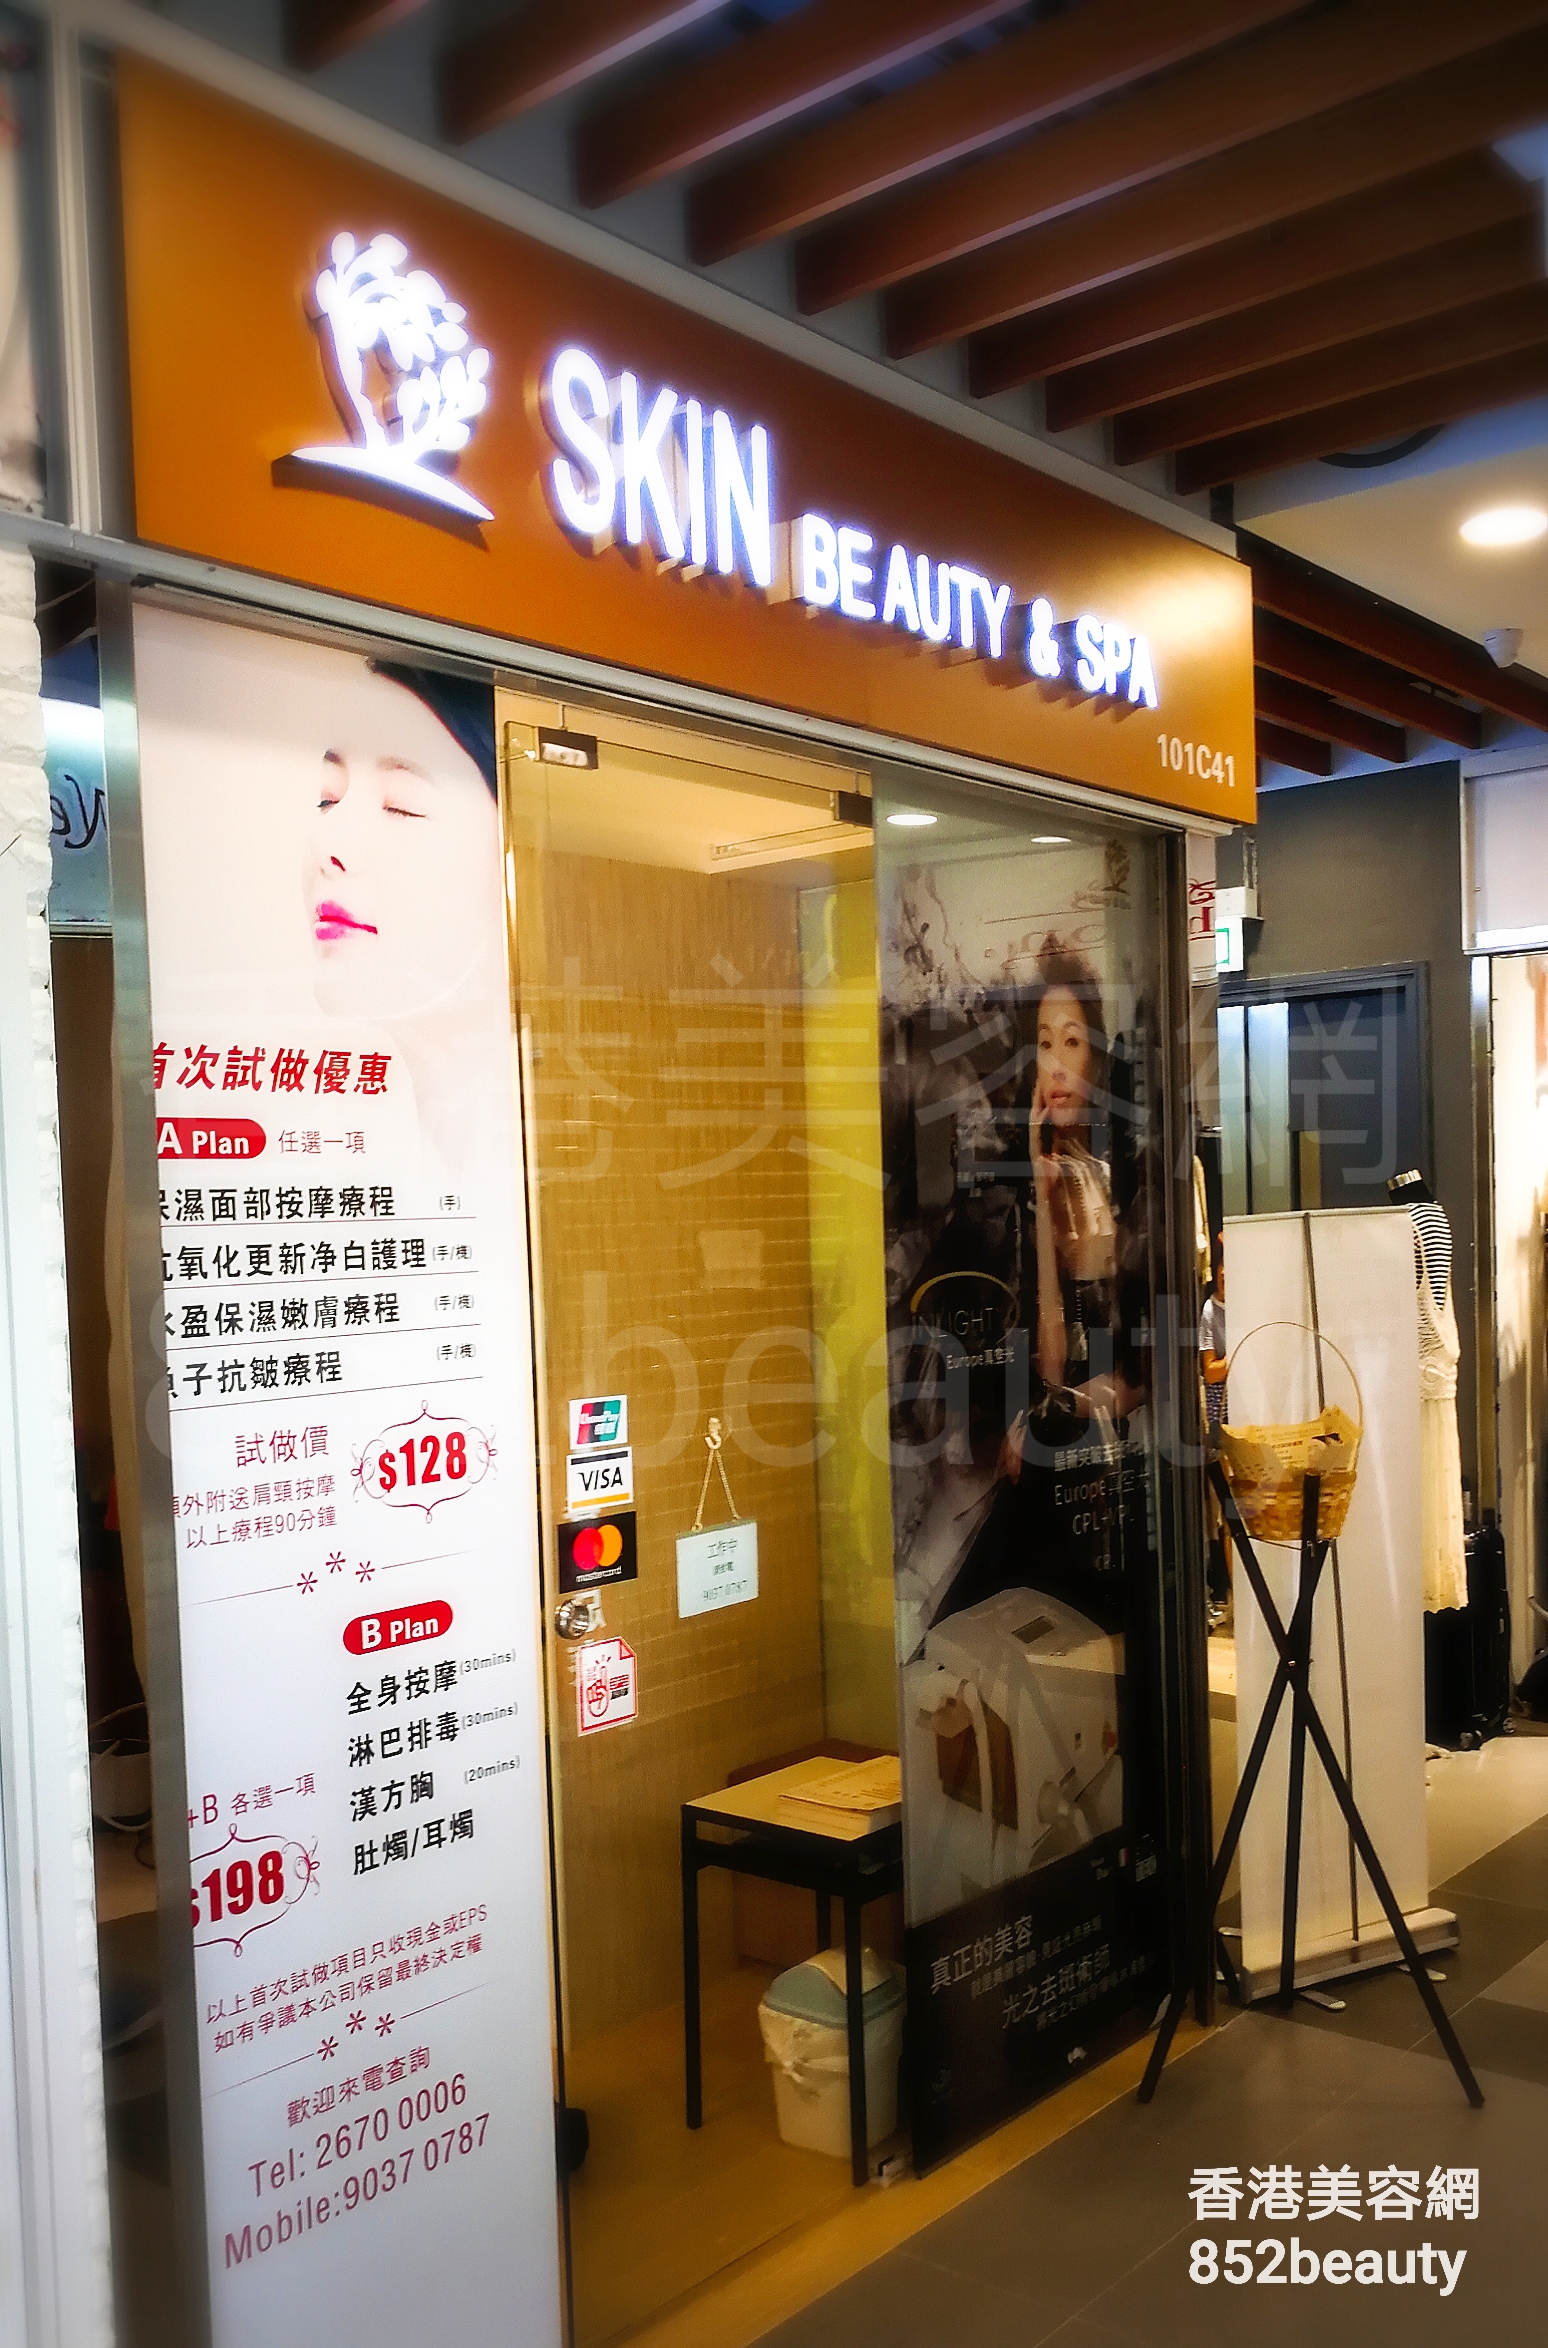 香港美容網 Hong Kong Beauty Salon 美容院 / 美容師: SKIN BEAUTY & SPA